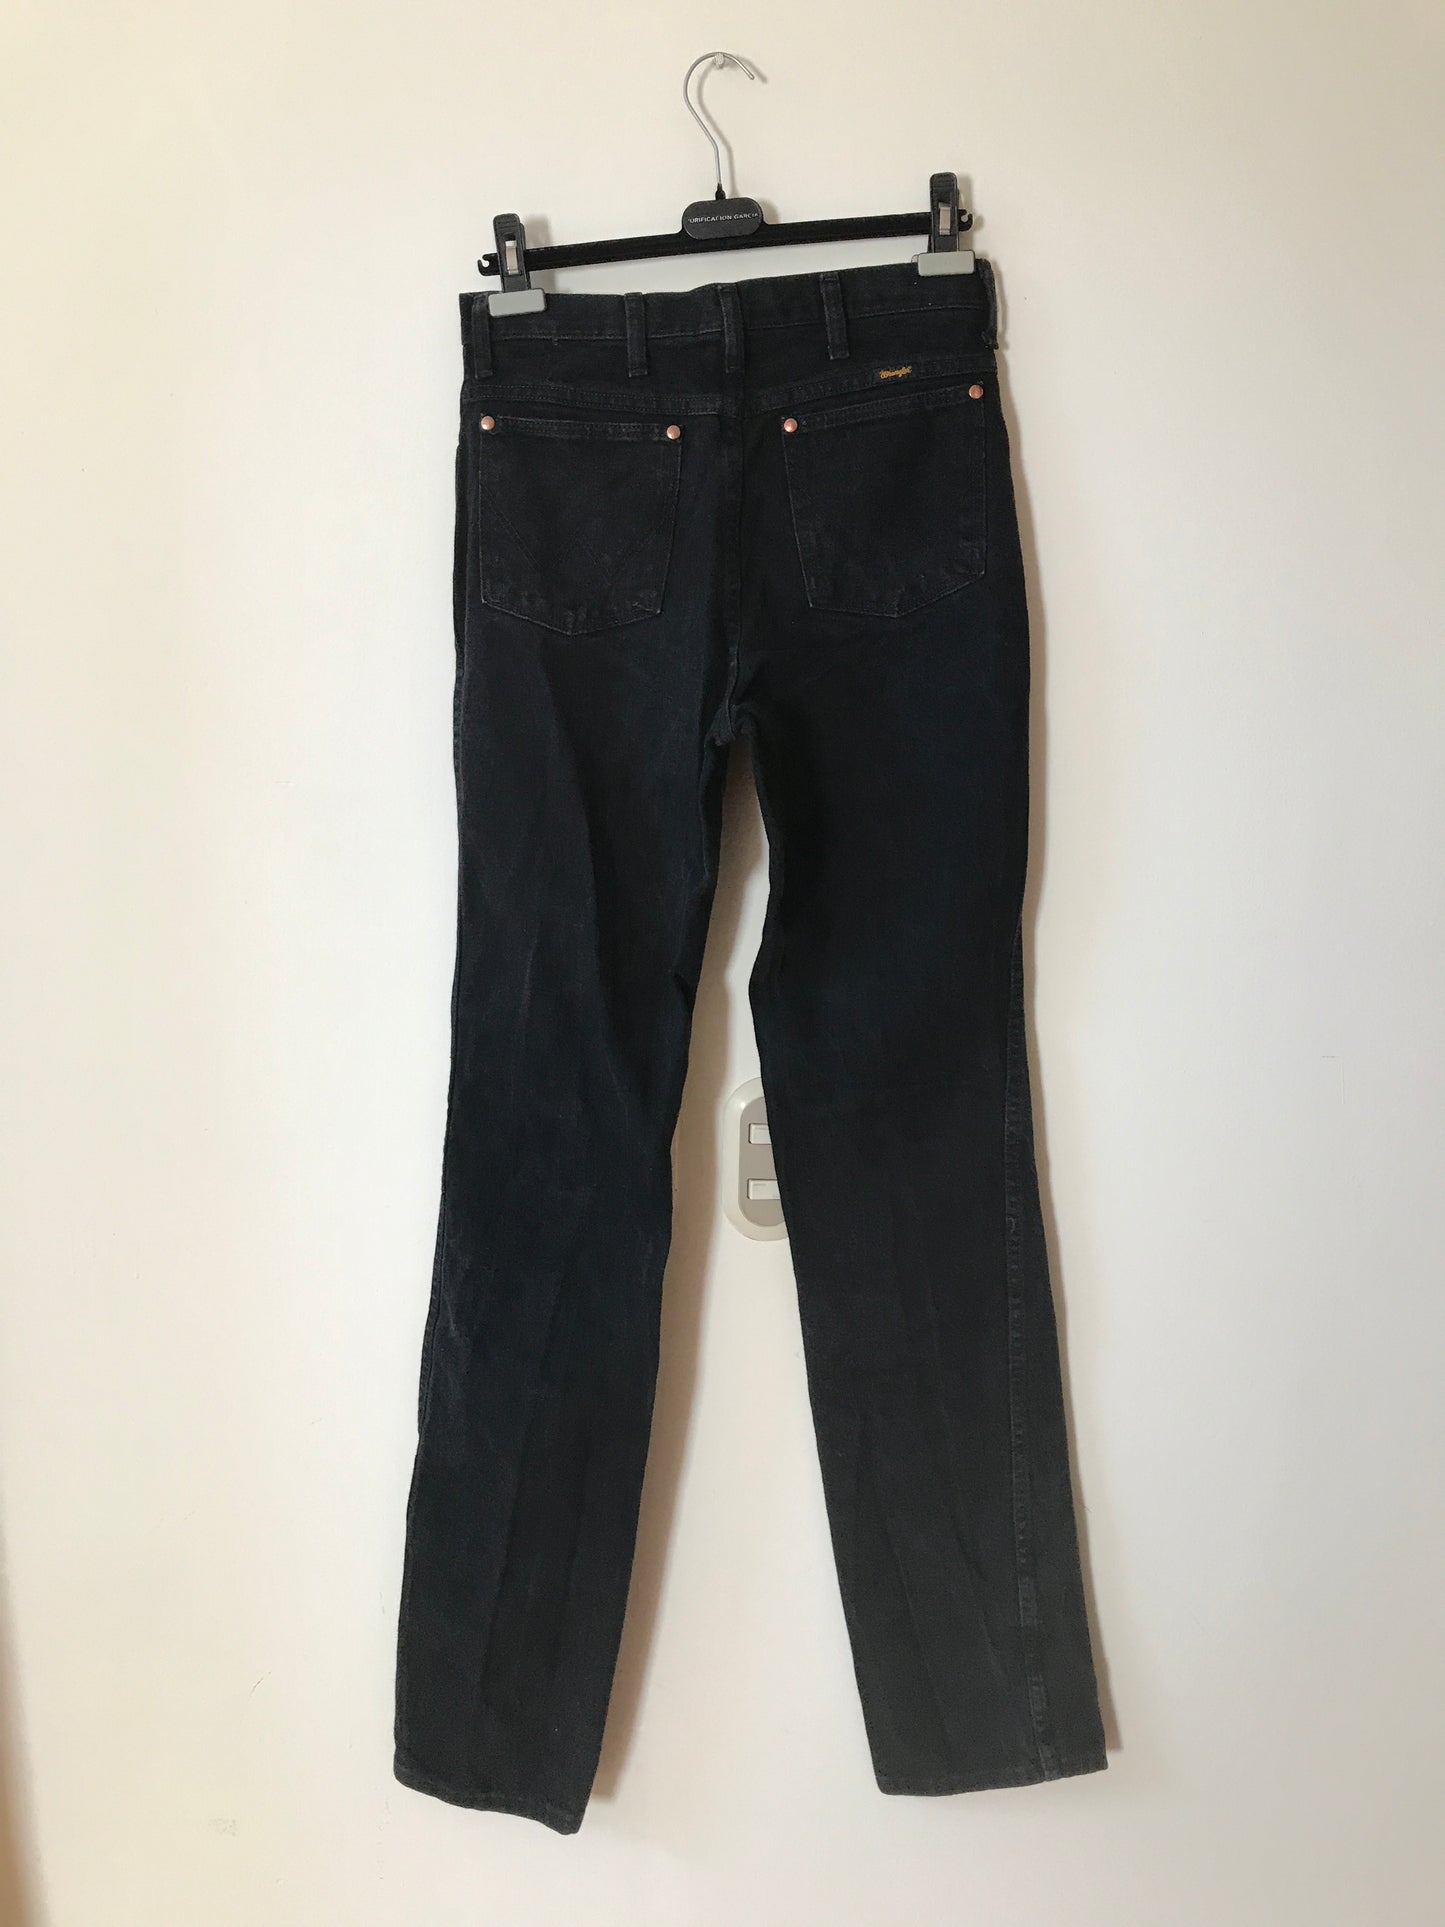 Vintage Wrangler High Waist Jeans